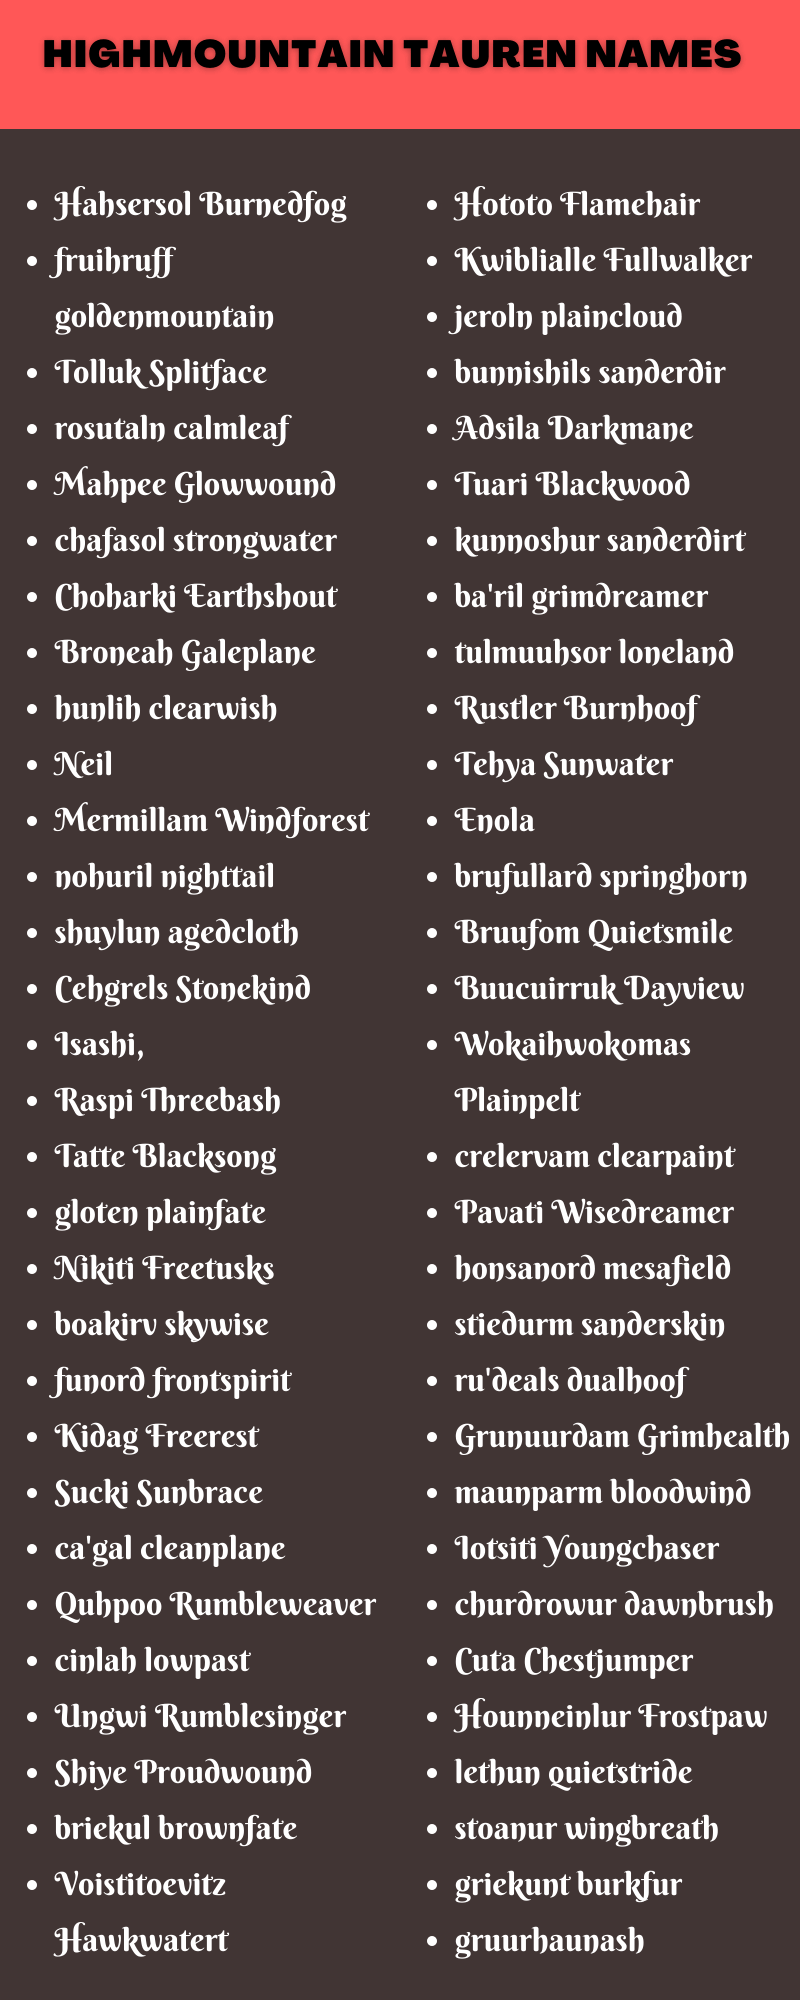 Highmountain Tauren Names